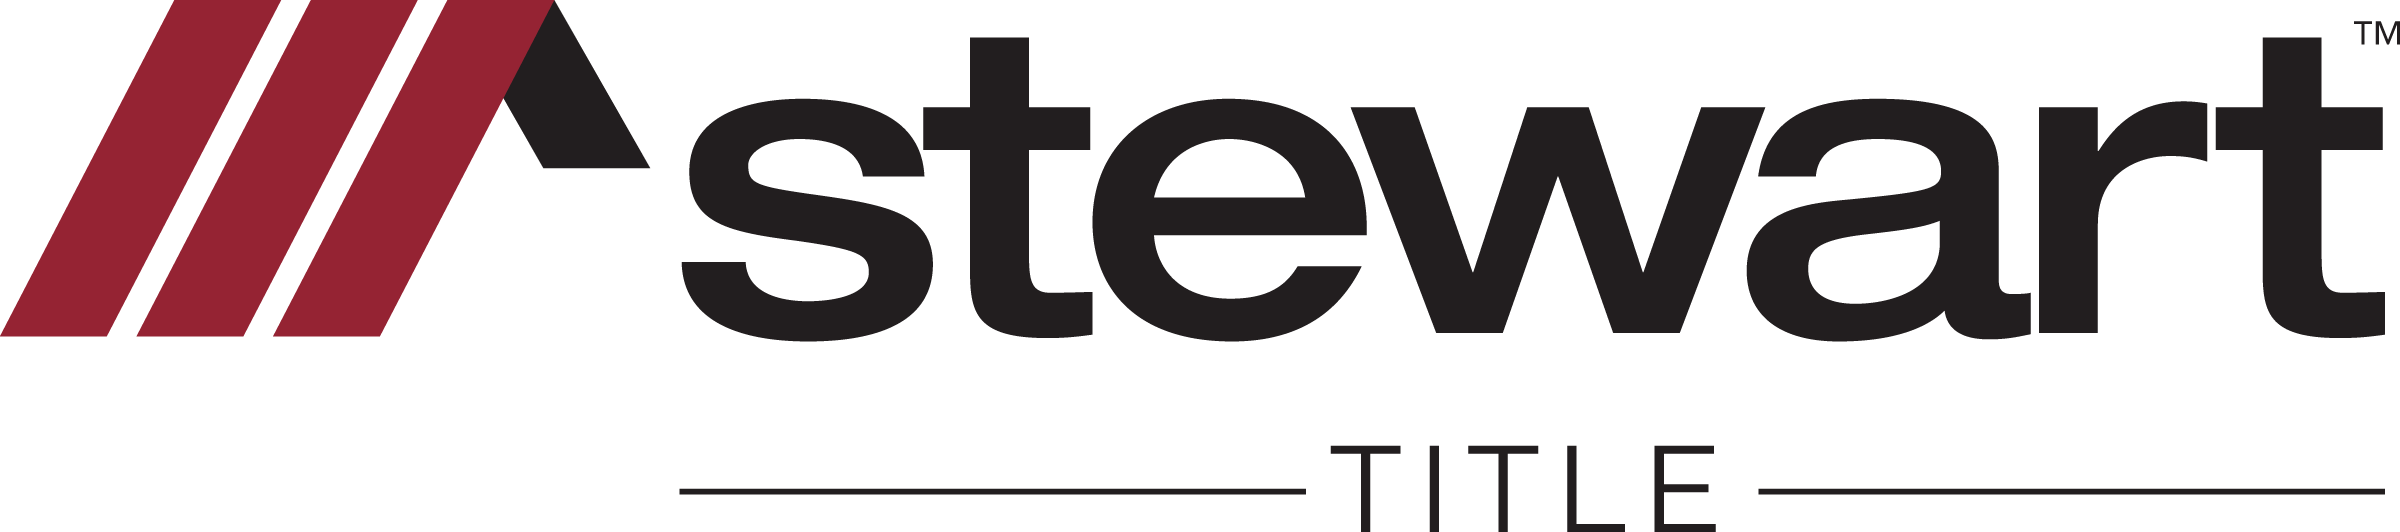 Sponsor logo image